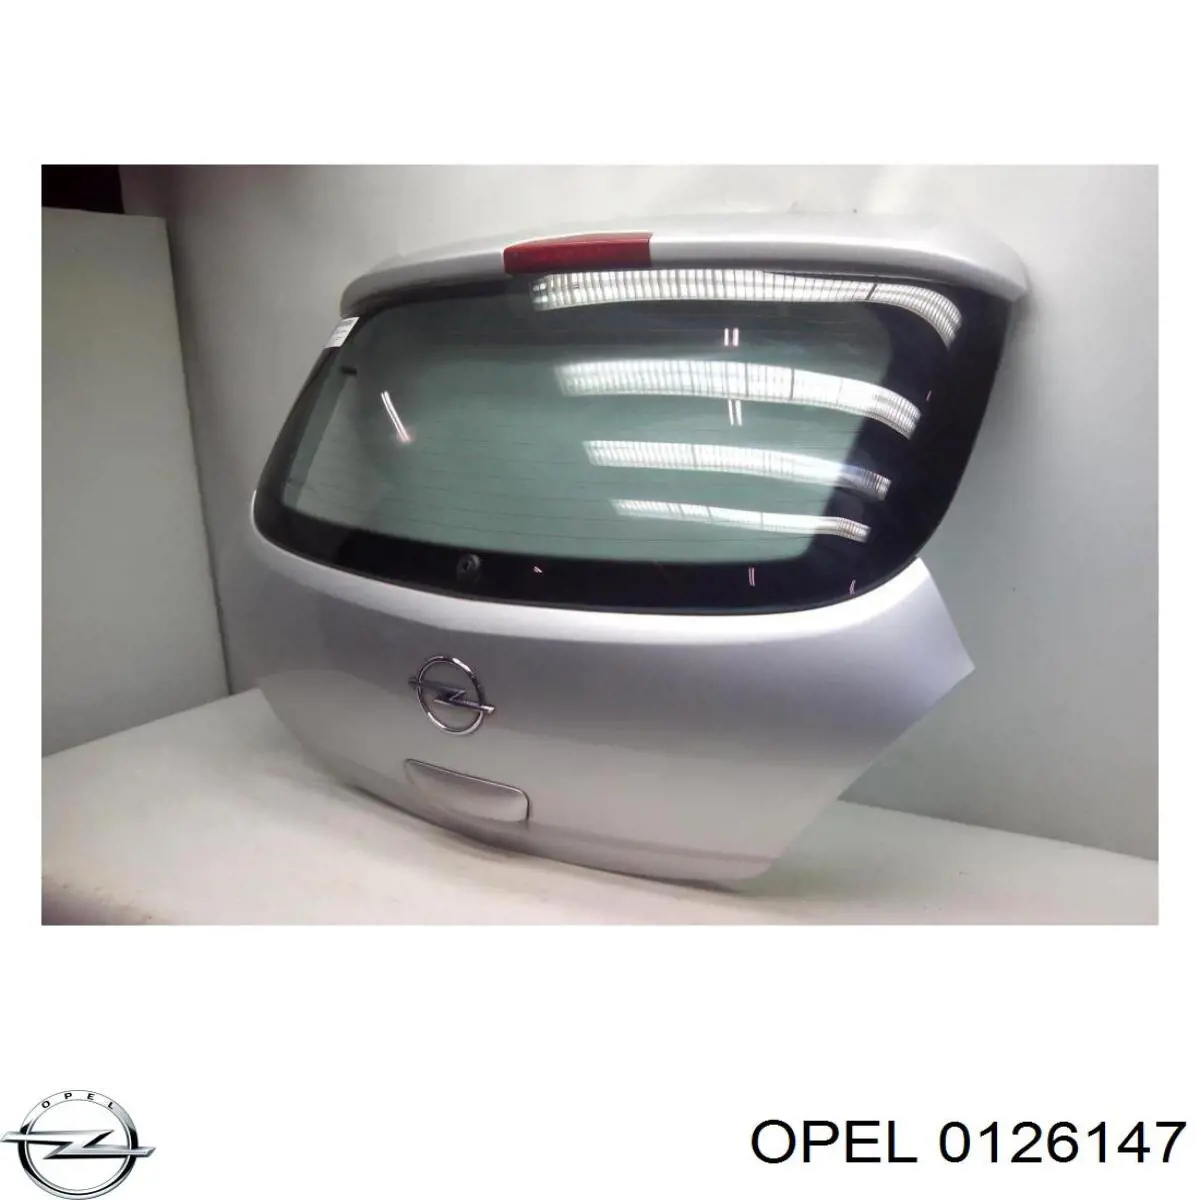 0126147 Opel porta traseira (3ª/5ª porta-malas (tampa de alcapão)